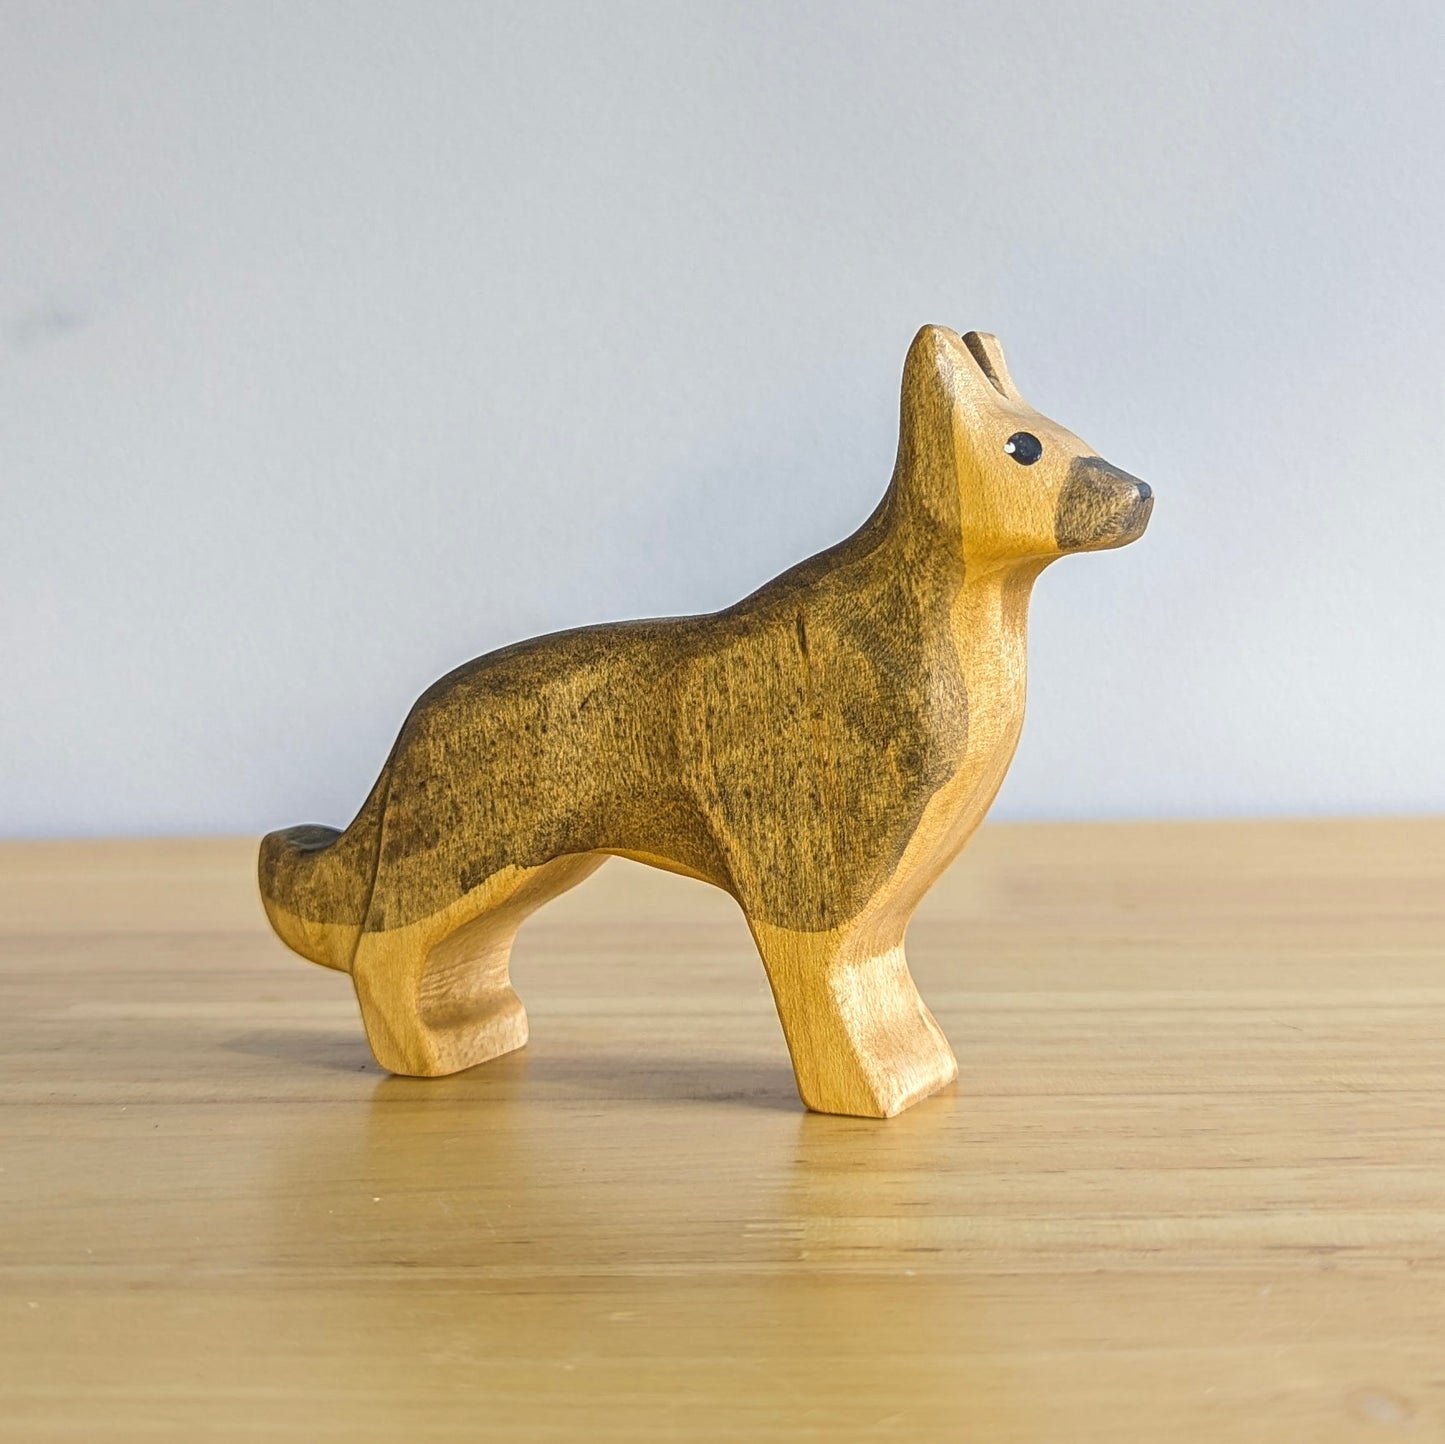 German Shepherd Dog Wooden Toy